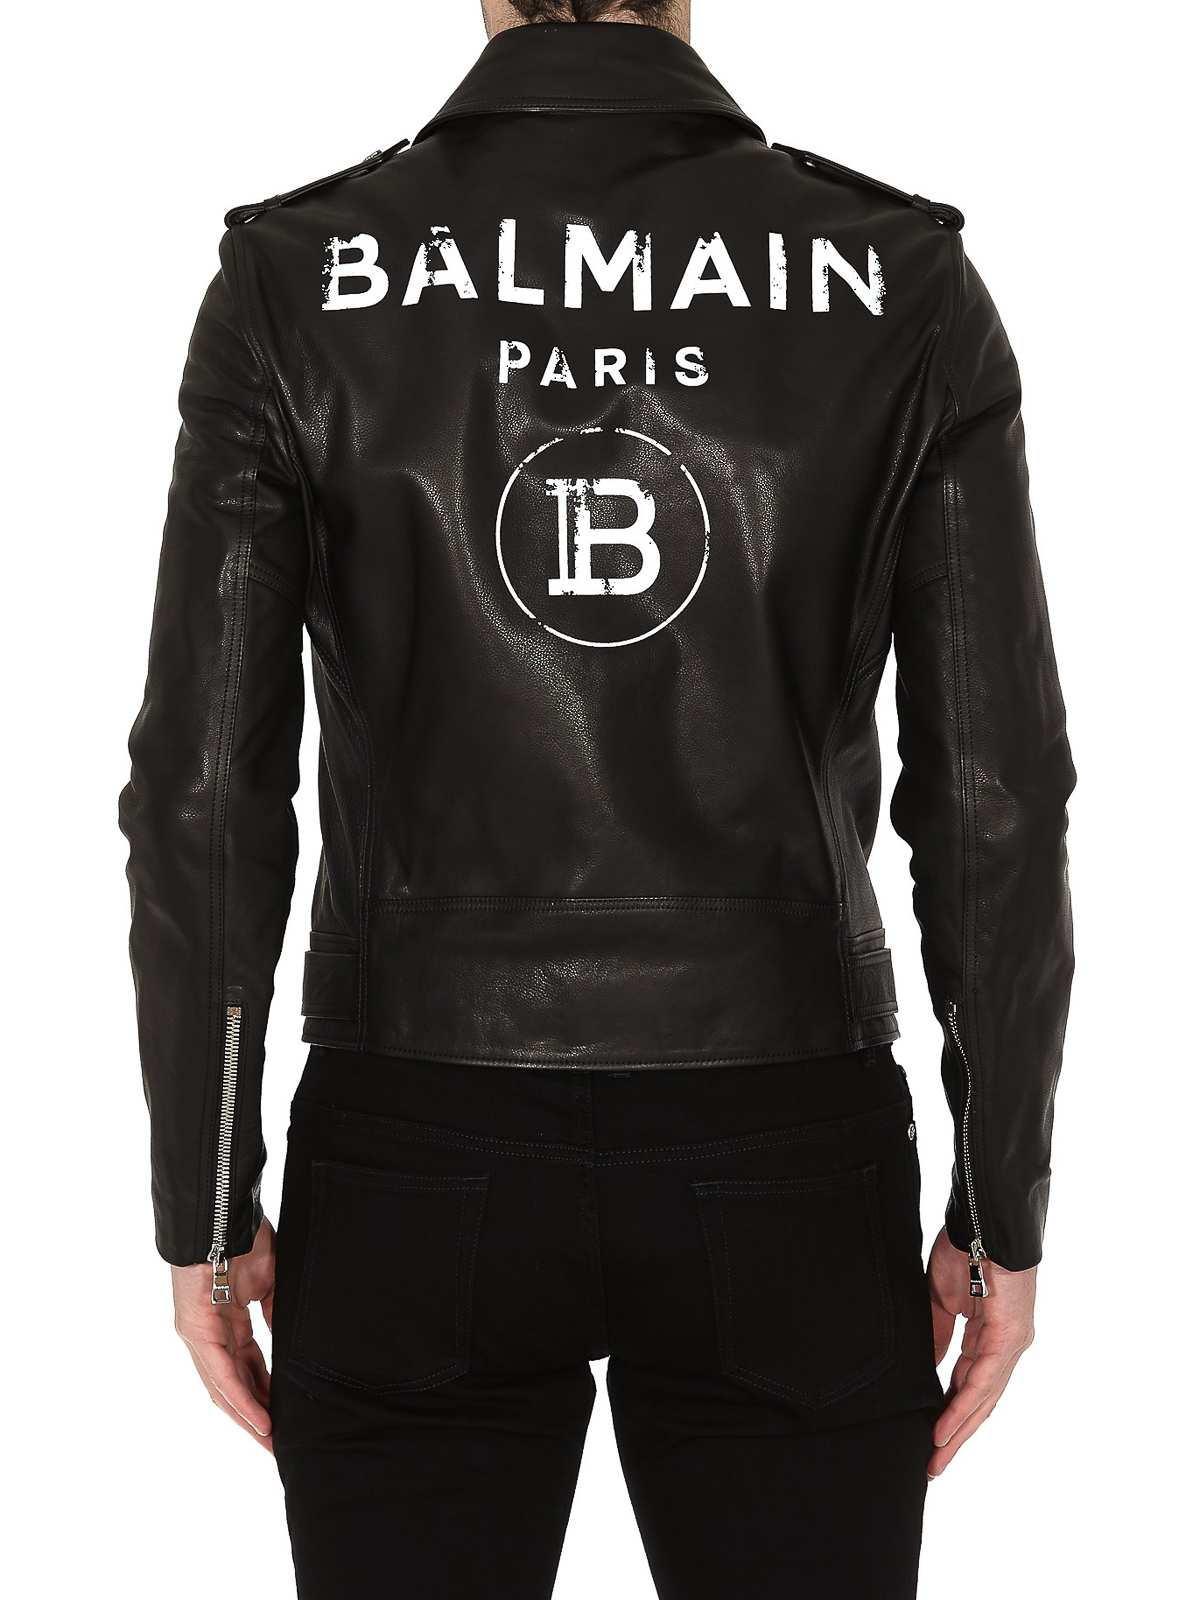 Balmain Paris Men's Jacket 32% -